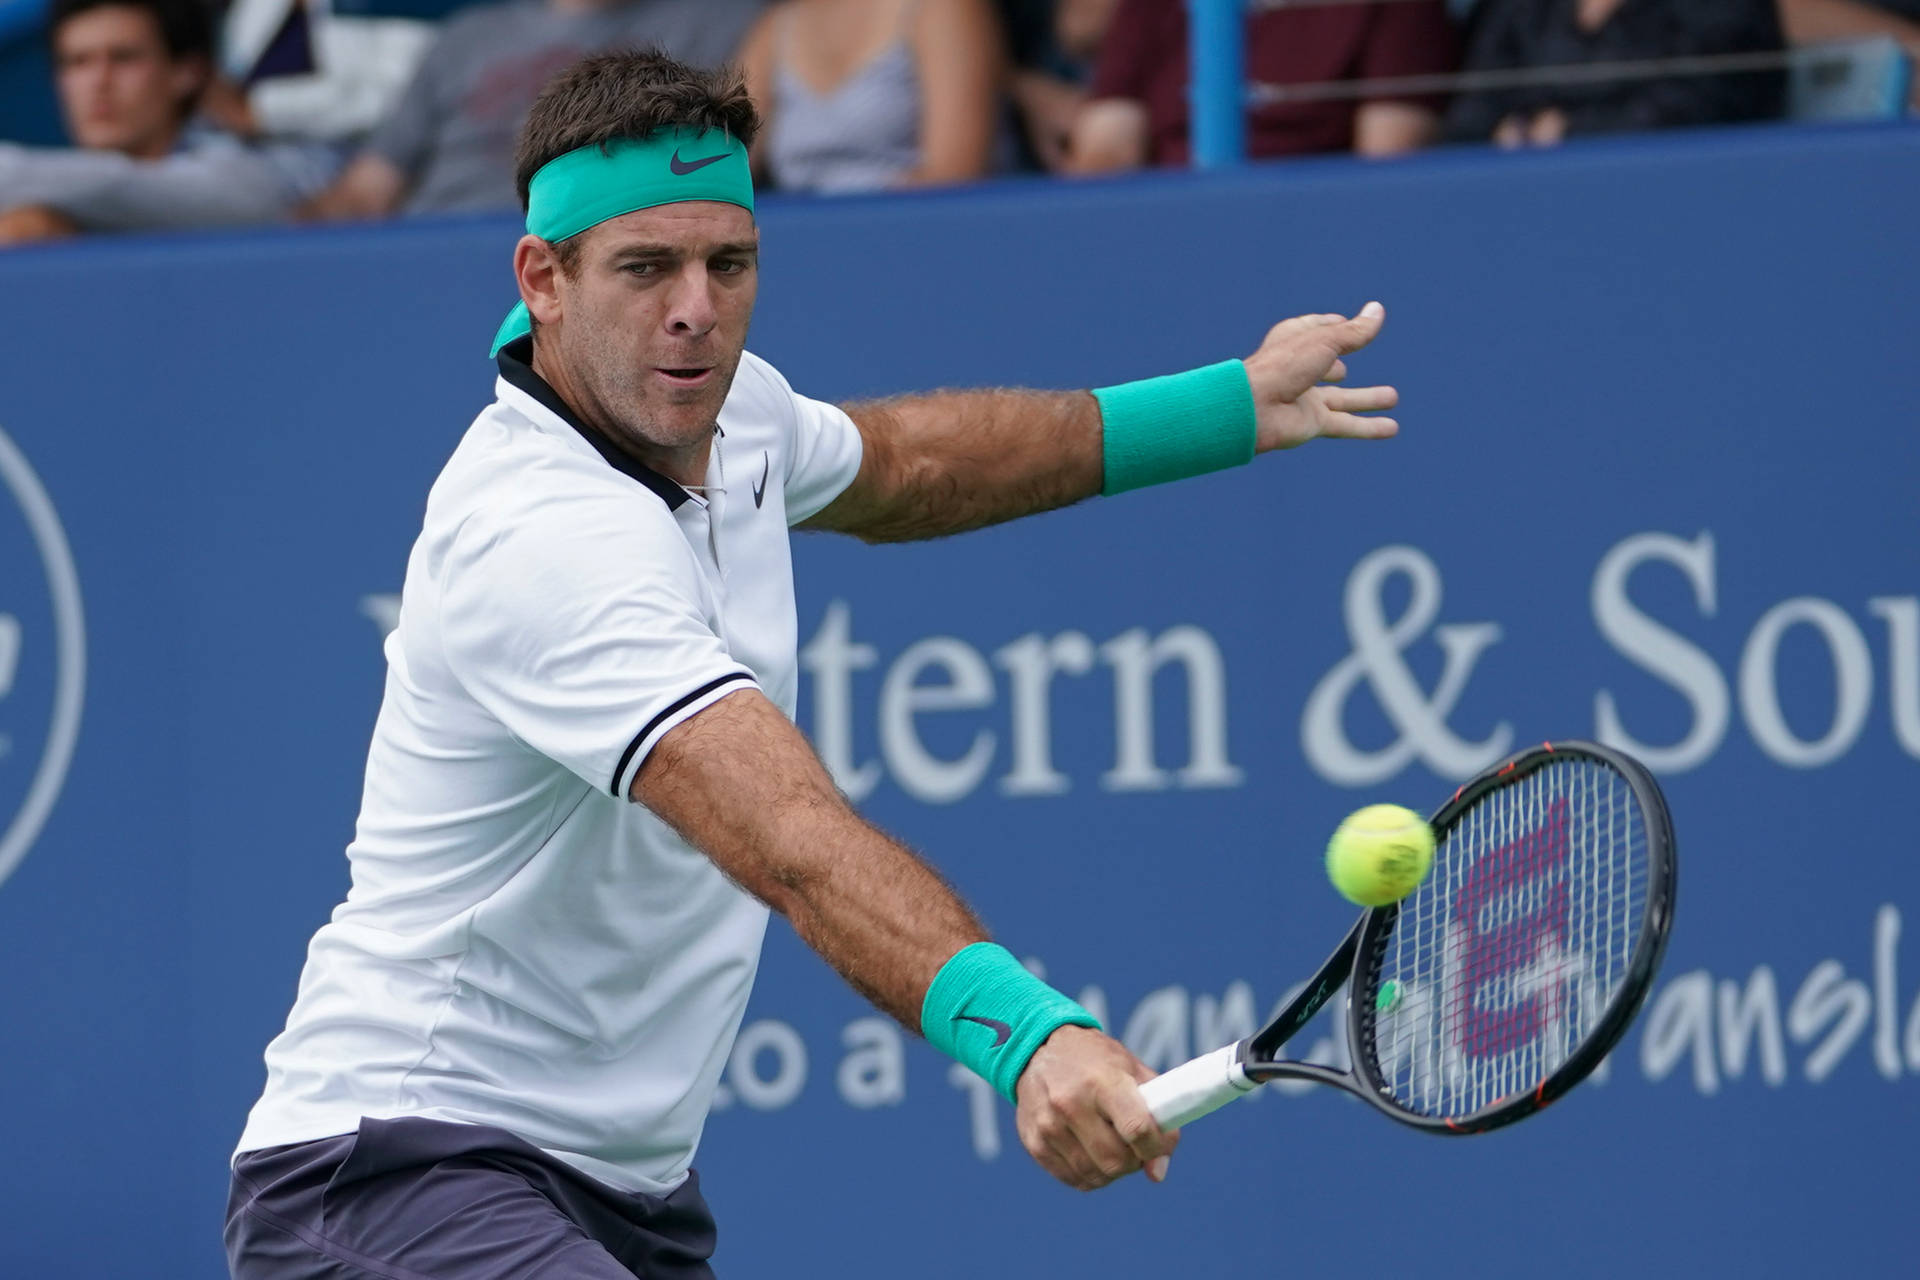 Juan Soto Catching Tennis Ball